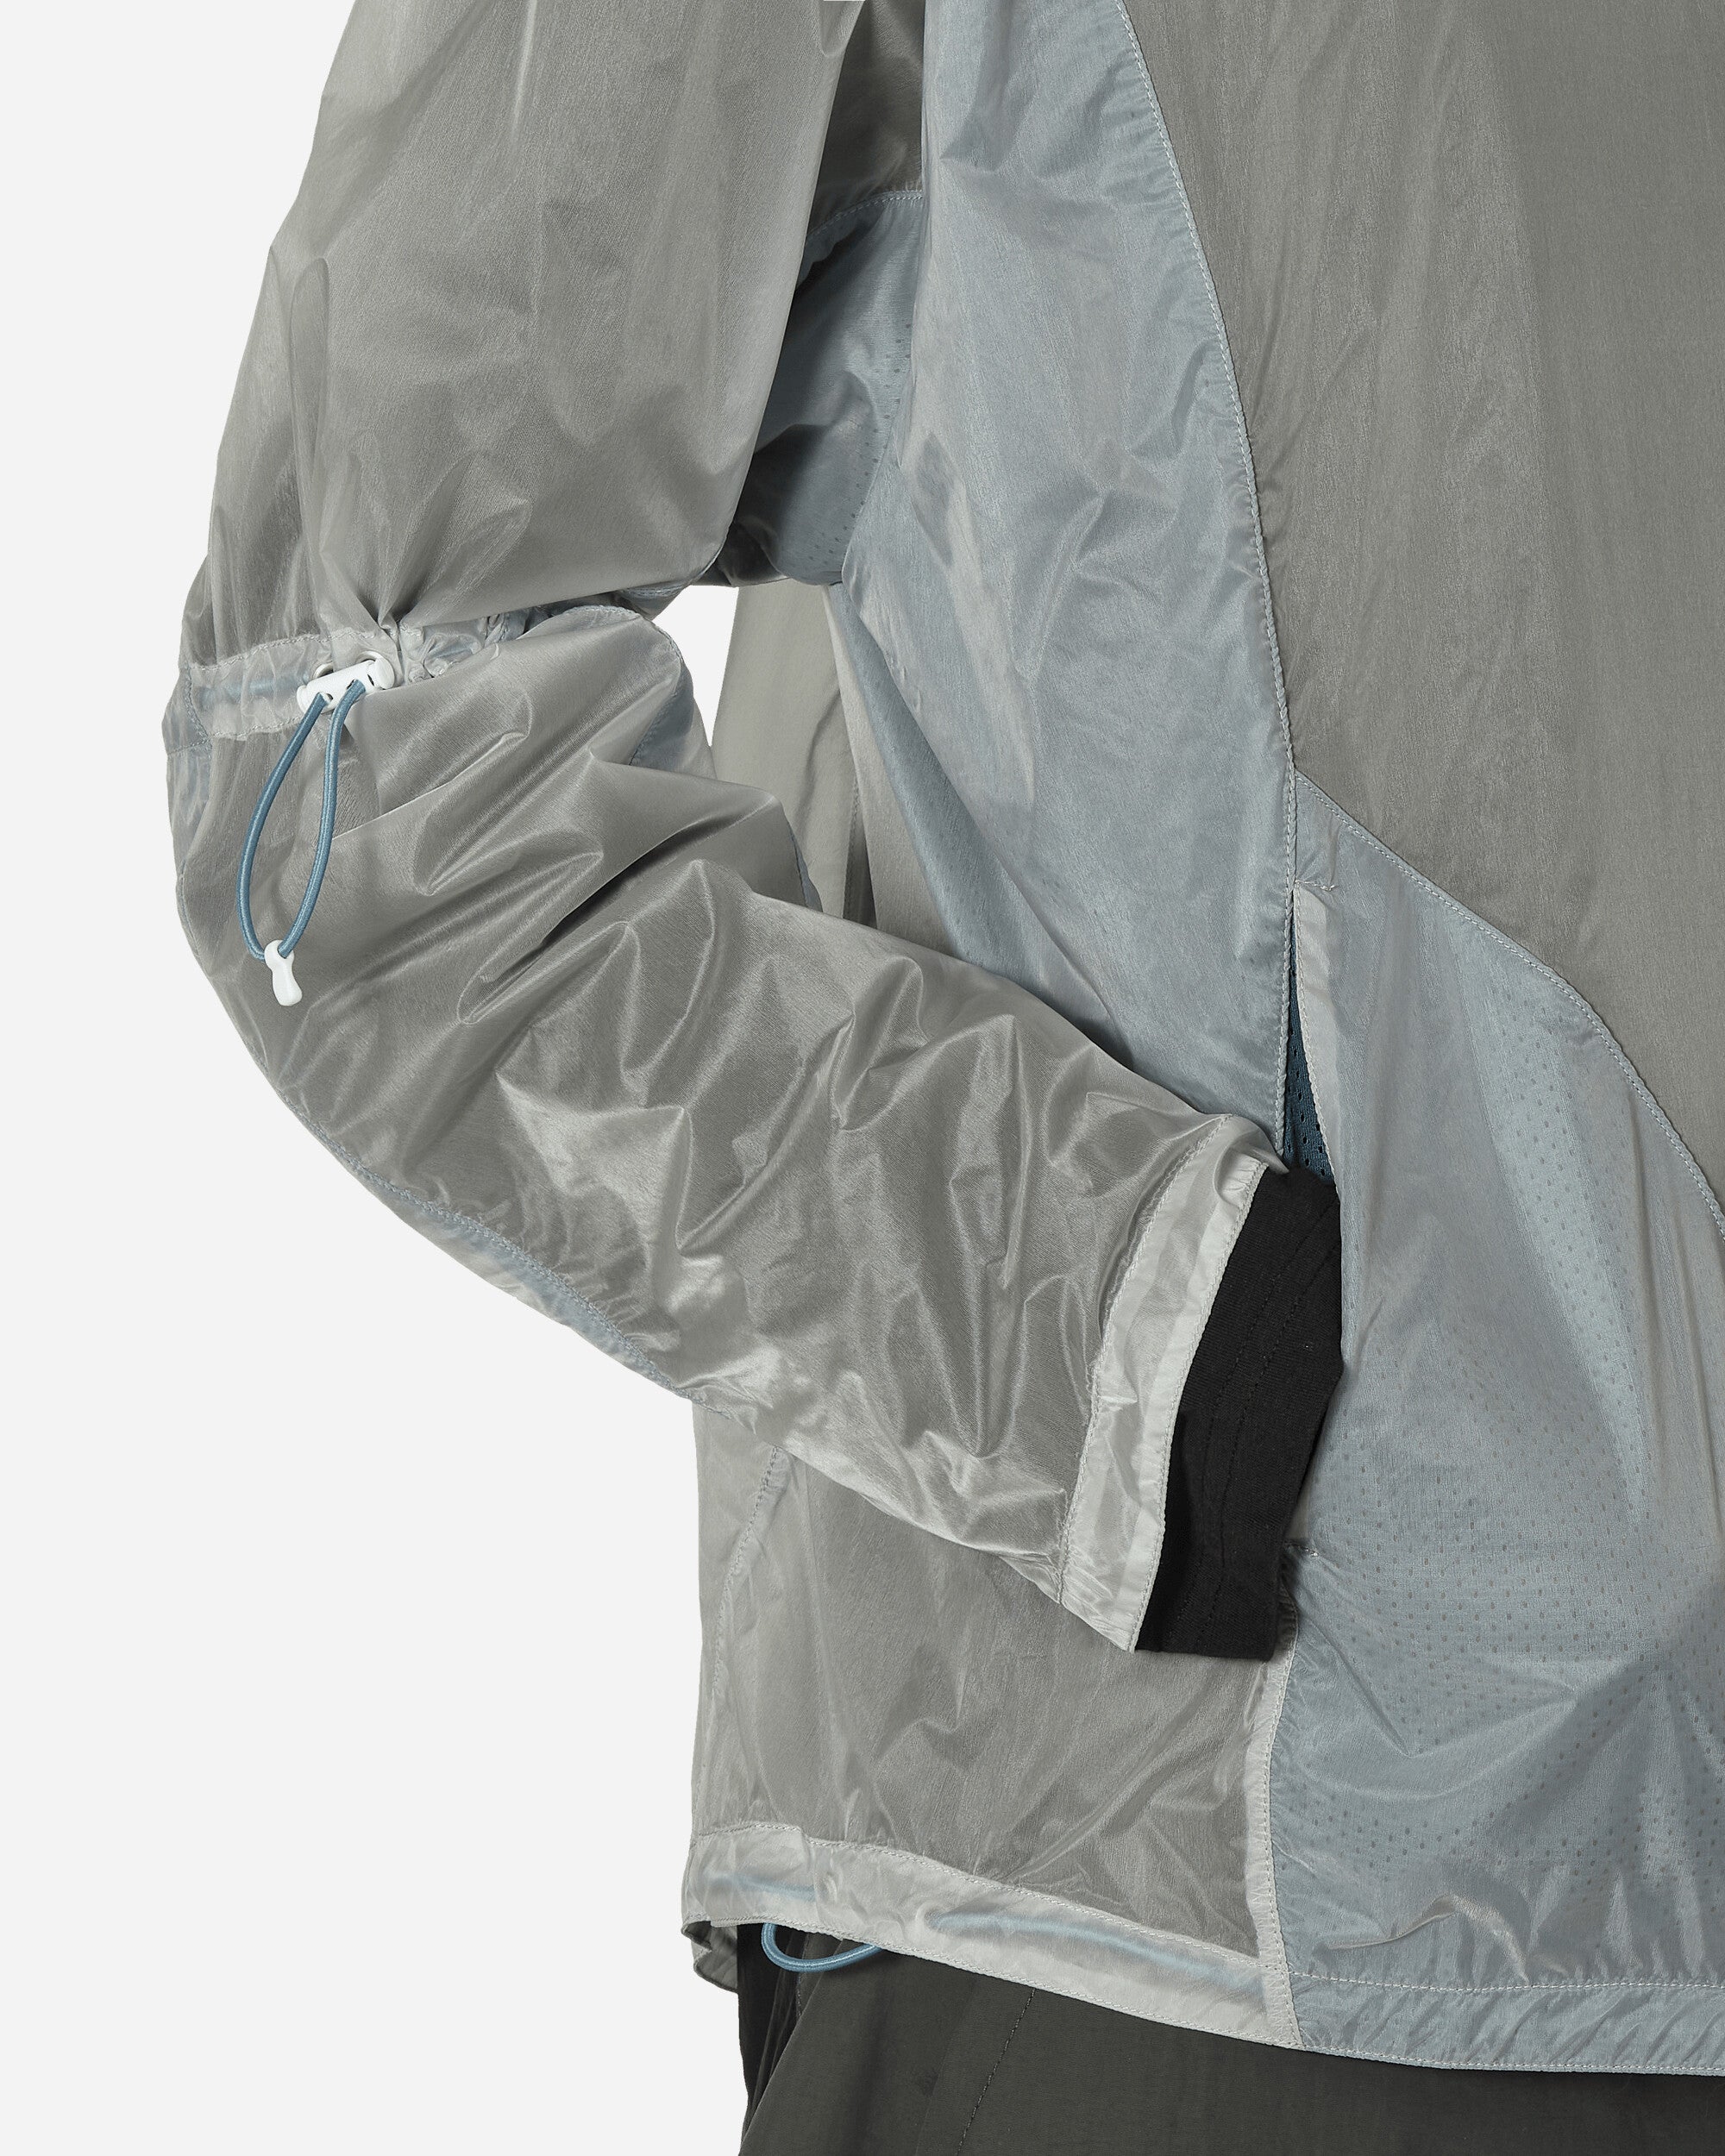 Reebok See Through Jacket Crystal Blue Coats and Jackets Jackets RMEA006C99FAB001